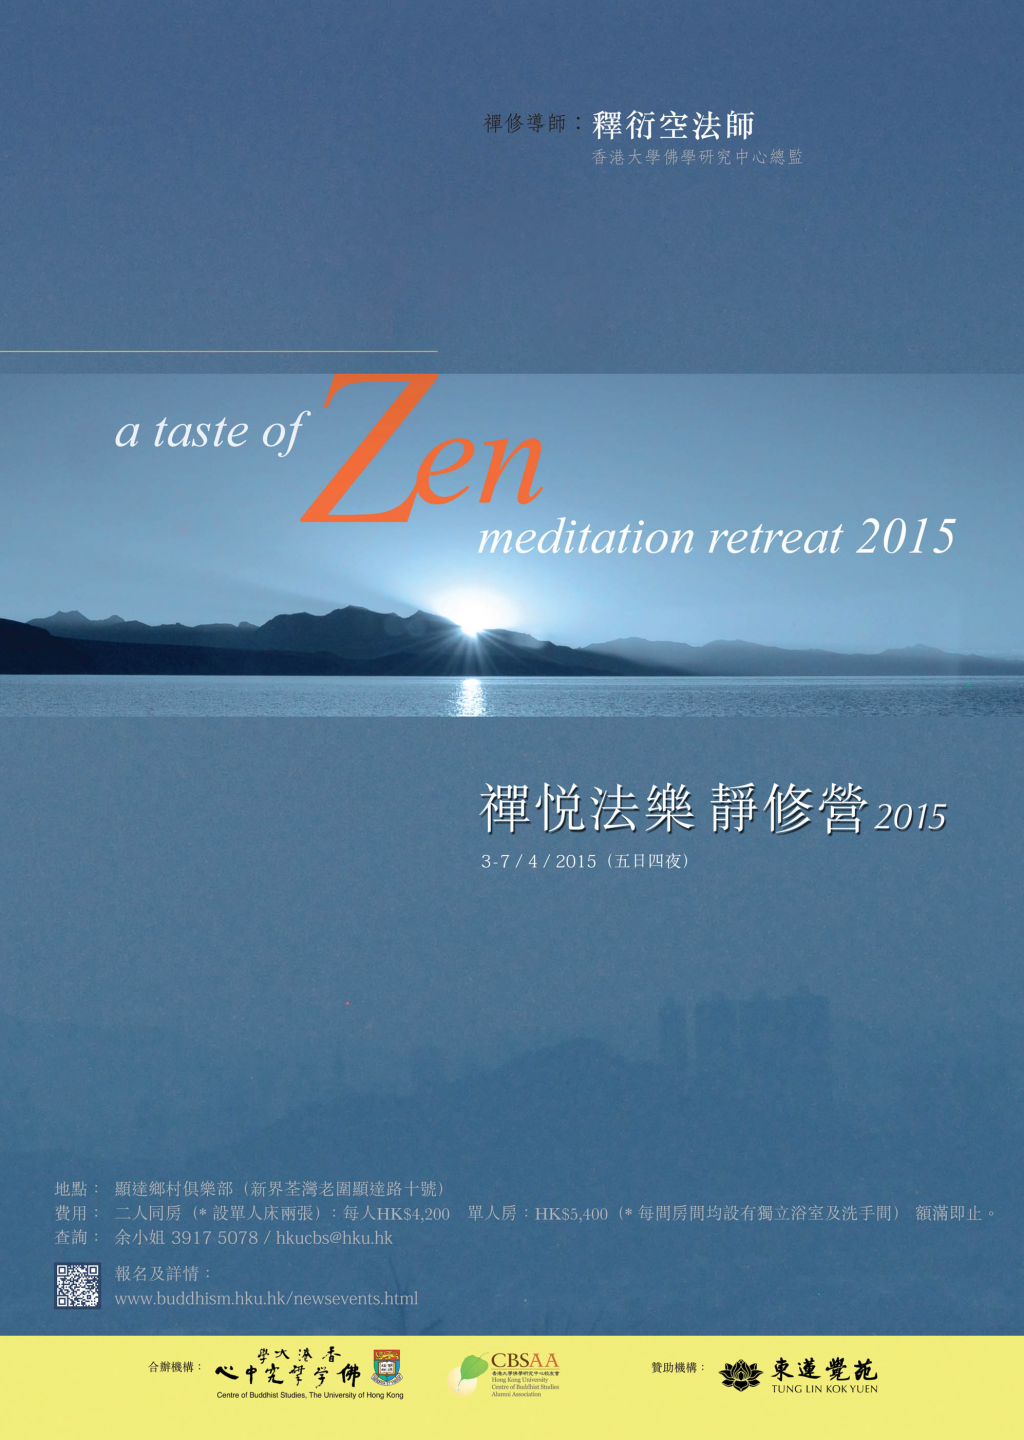 禪悅法樂靜修營2015 (A Taste of Zen Meditation Retreat) [粵語講授/ Conducted in Cantonese]